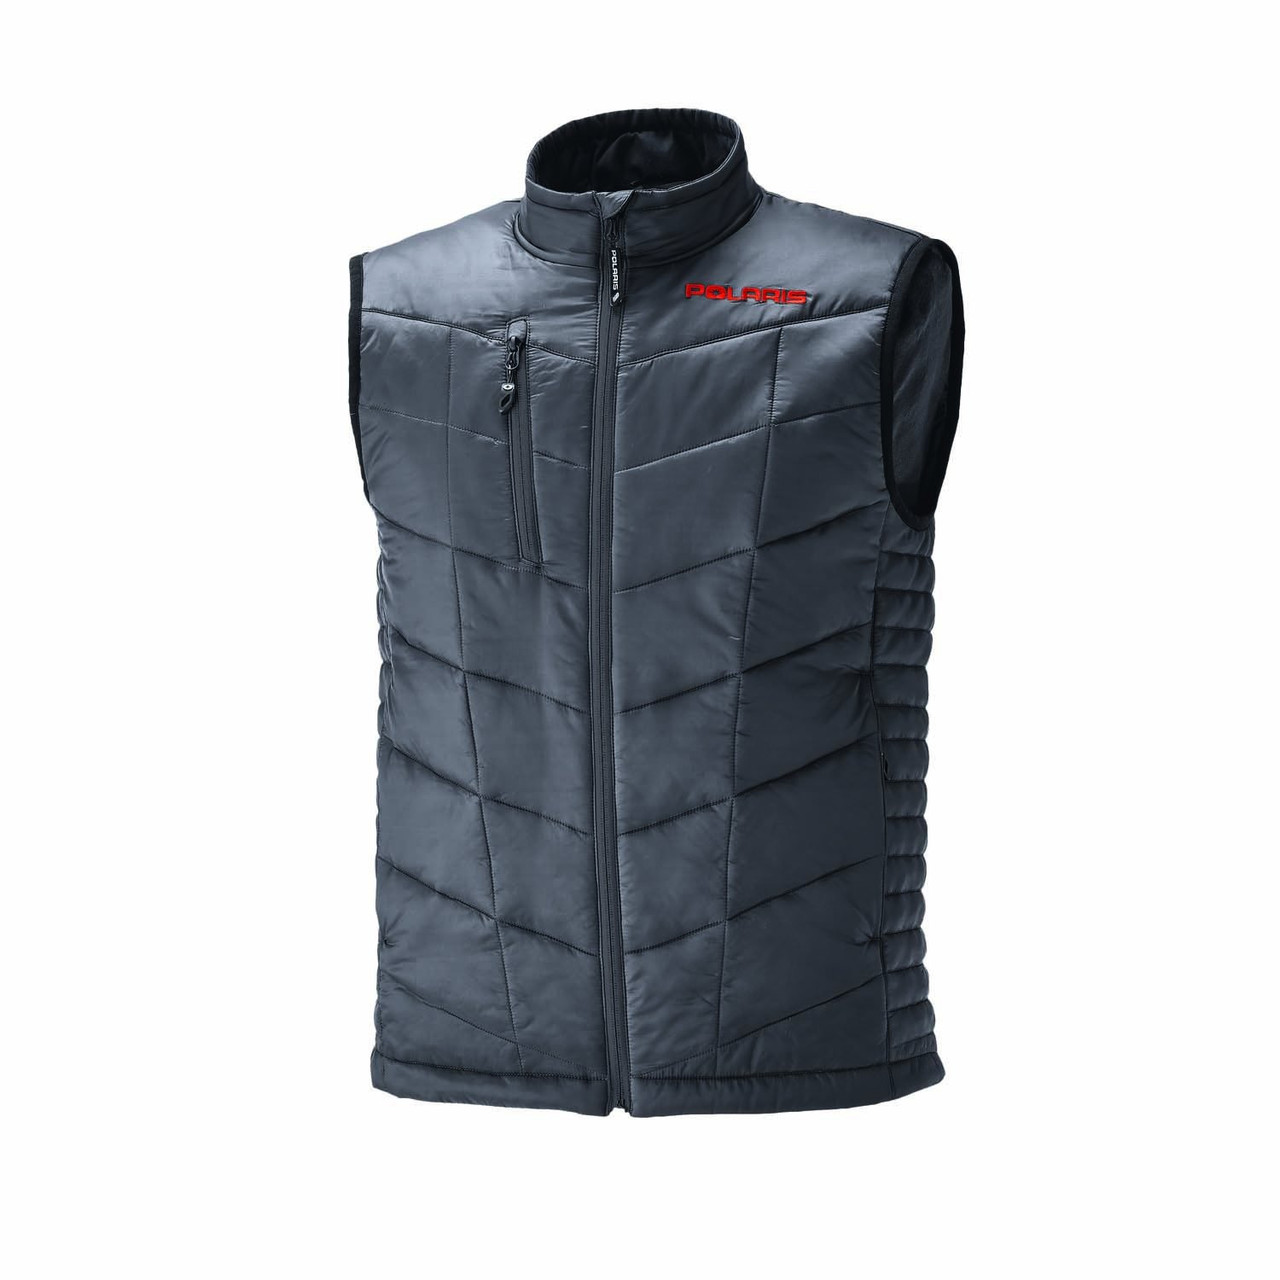 Polaris Snowmobile New OEM Men's 3XL, Dark Gray Heated Vest, 286992414